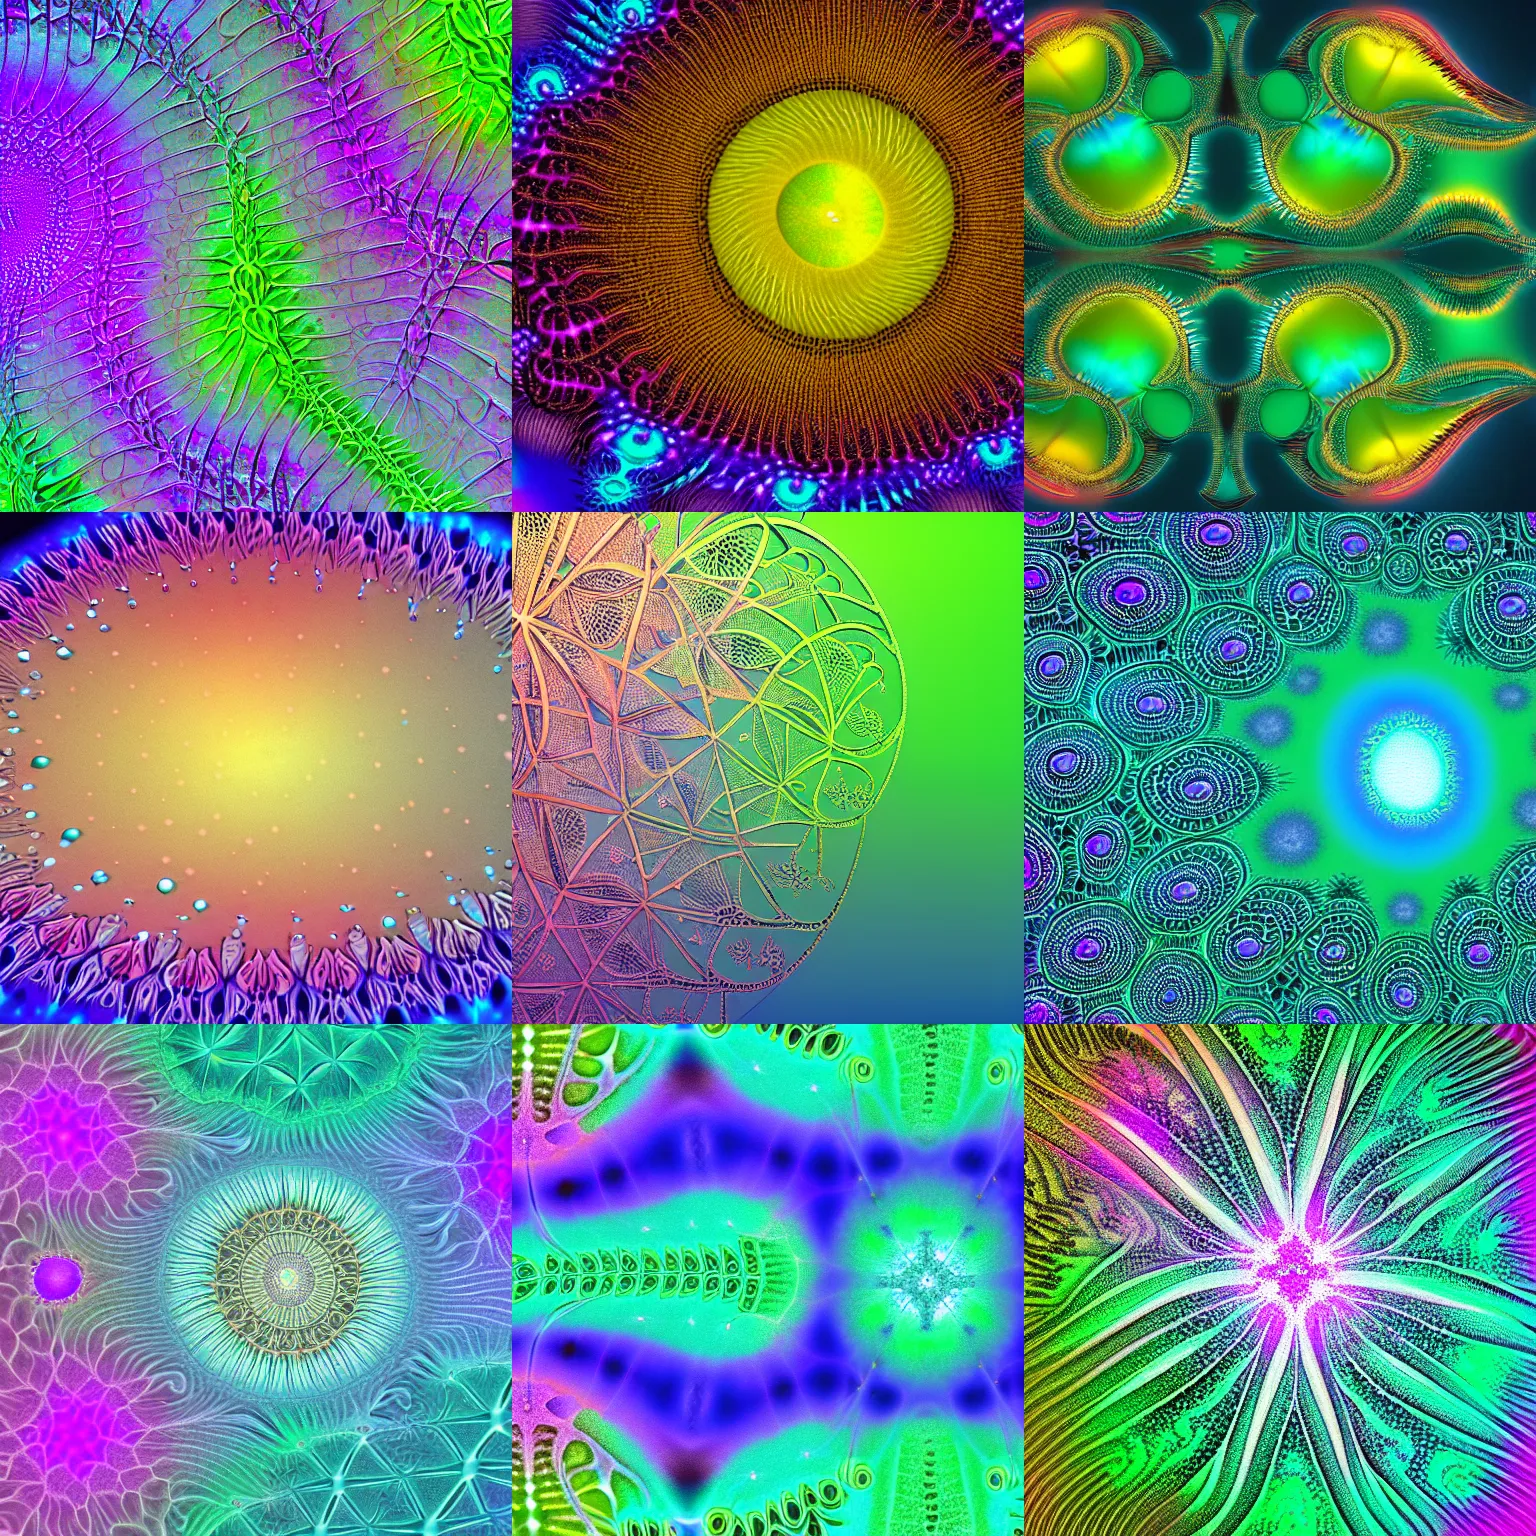 Prompt: iridescent diatoms with mandelbrot fractal patterns 4k